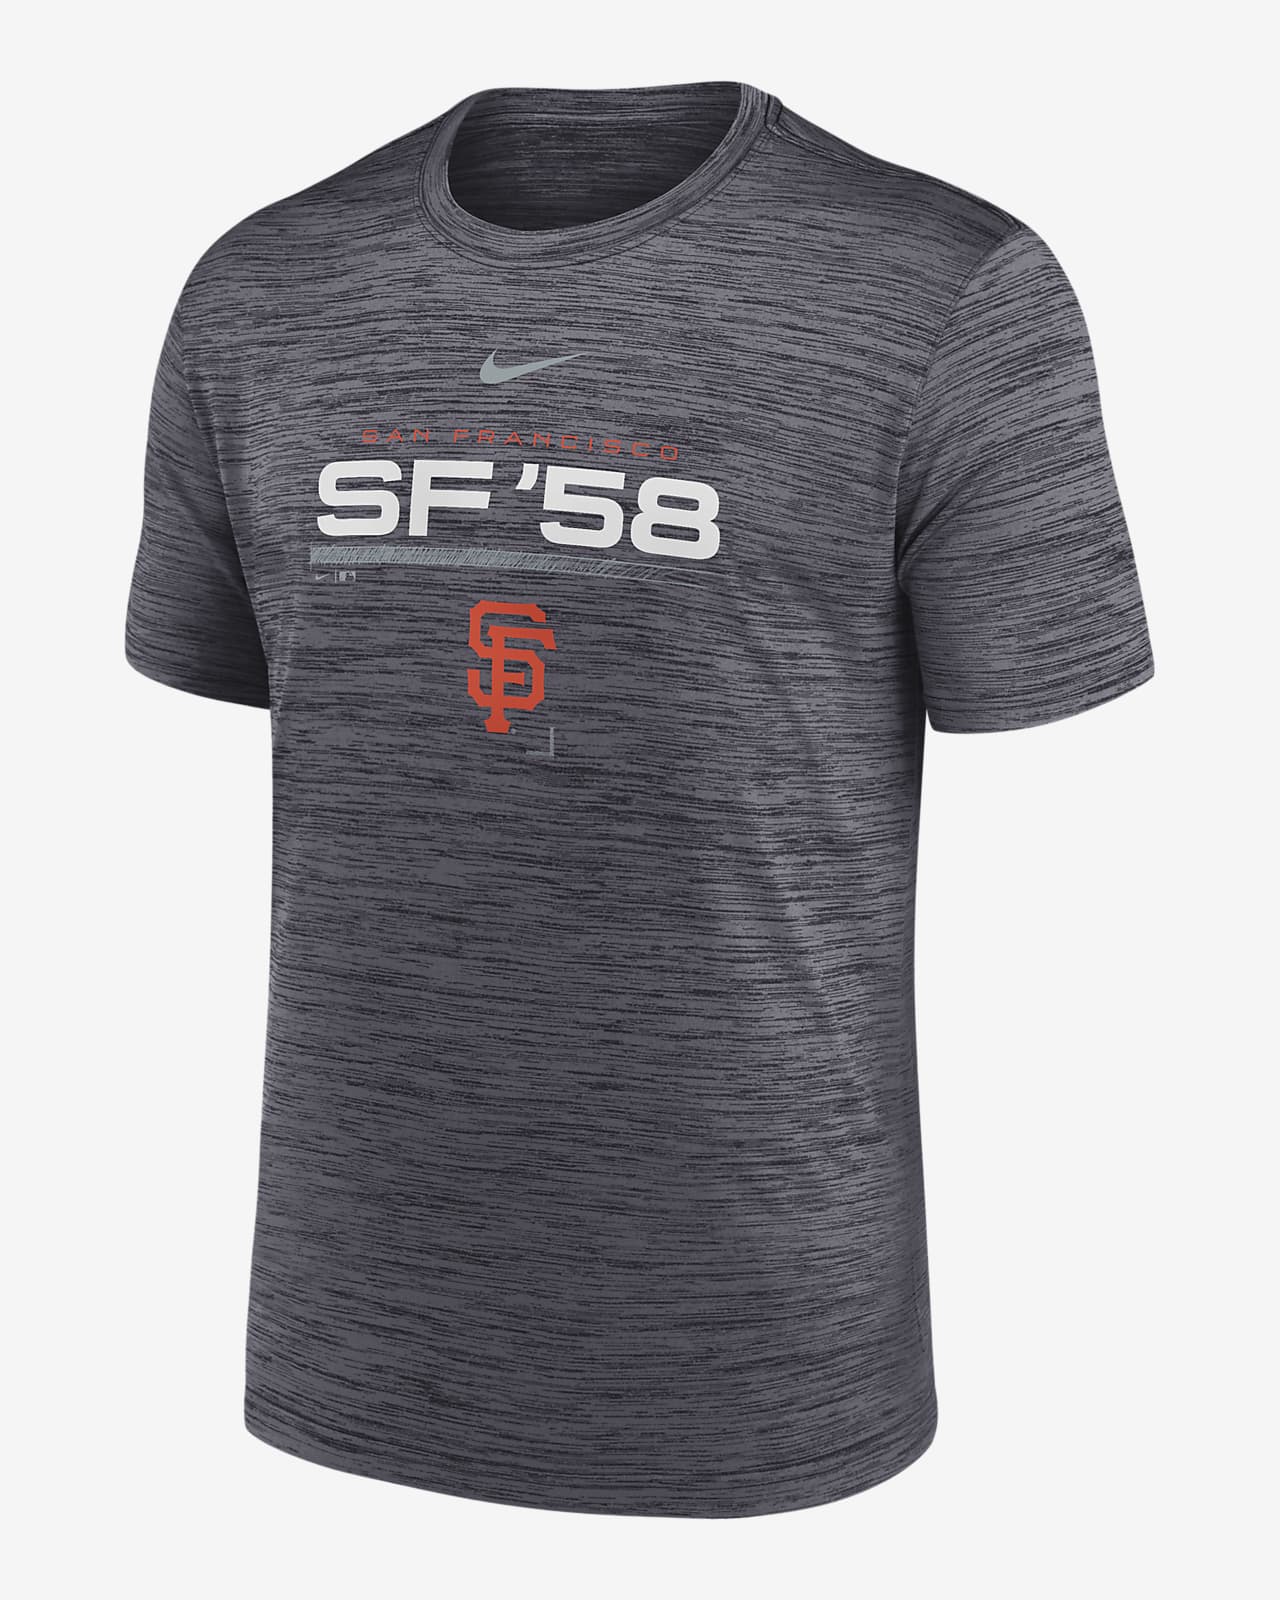 Nike Velocity Team (MLB San Francisco Giants) Men's T-Shirt